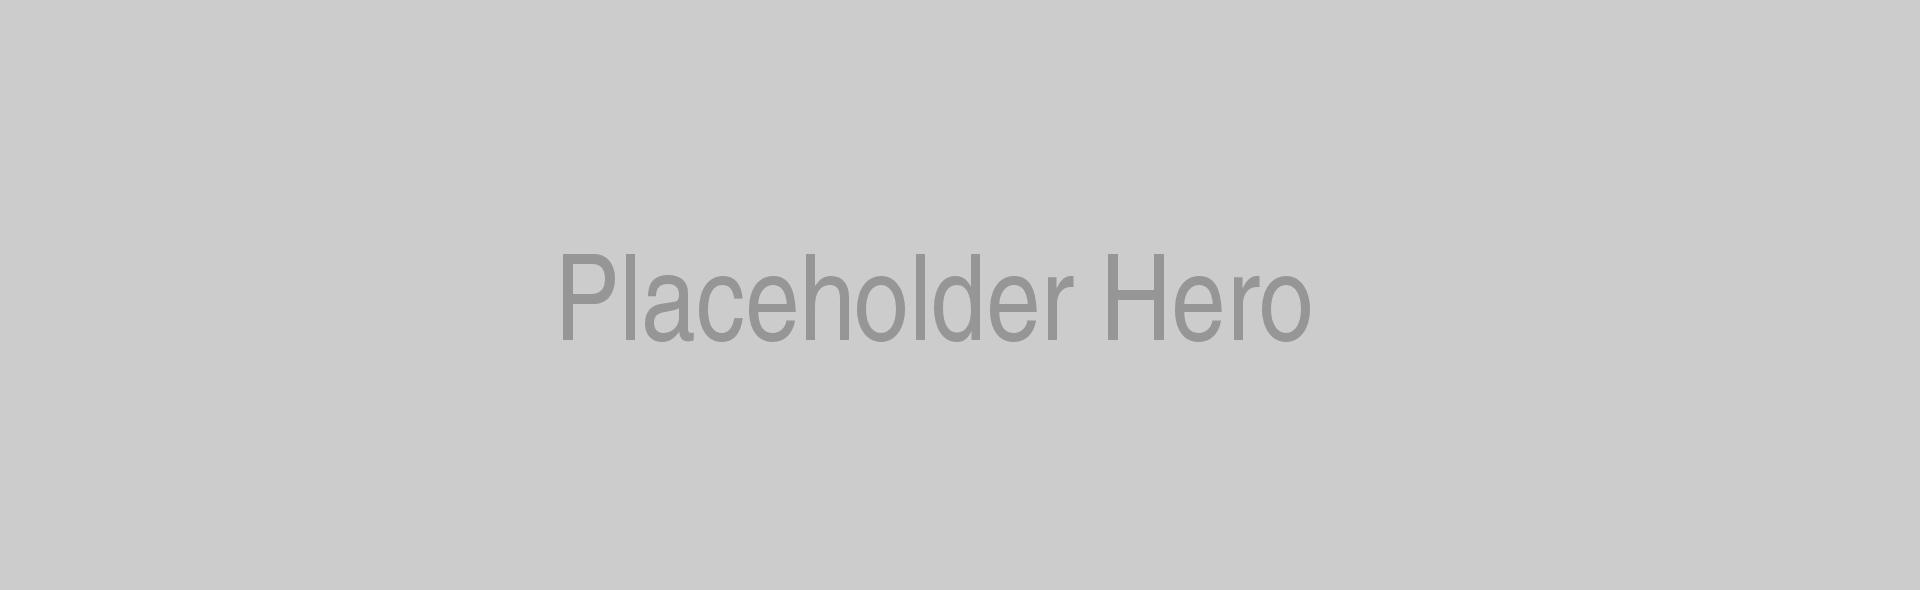 Placeholder Hero